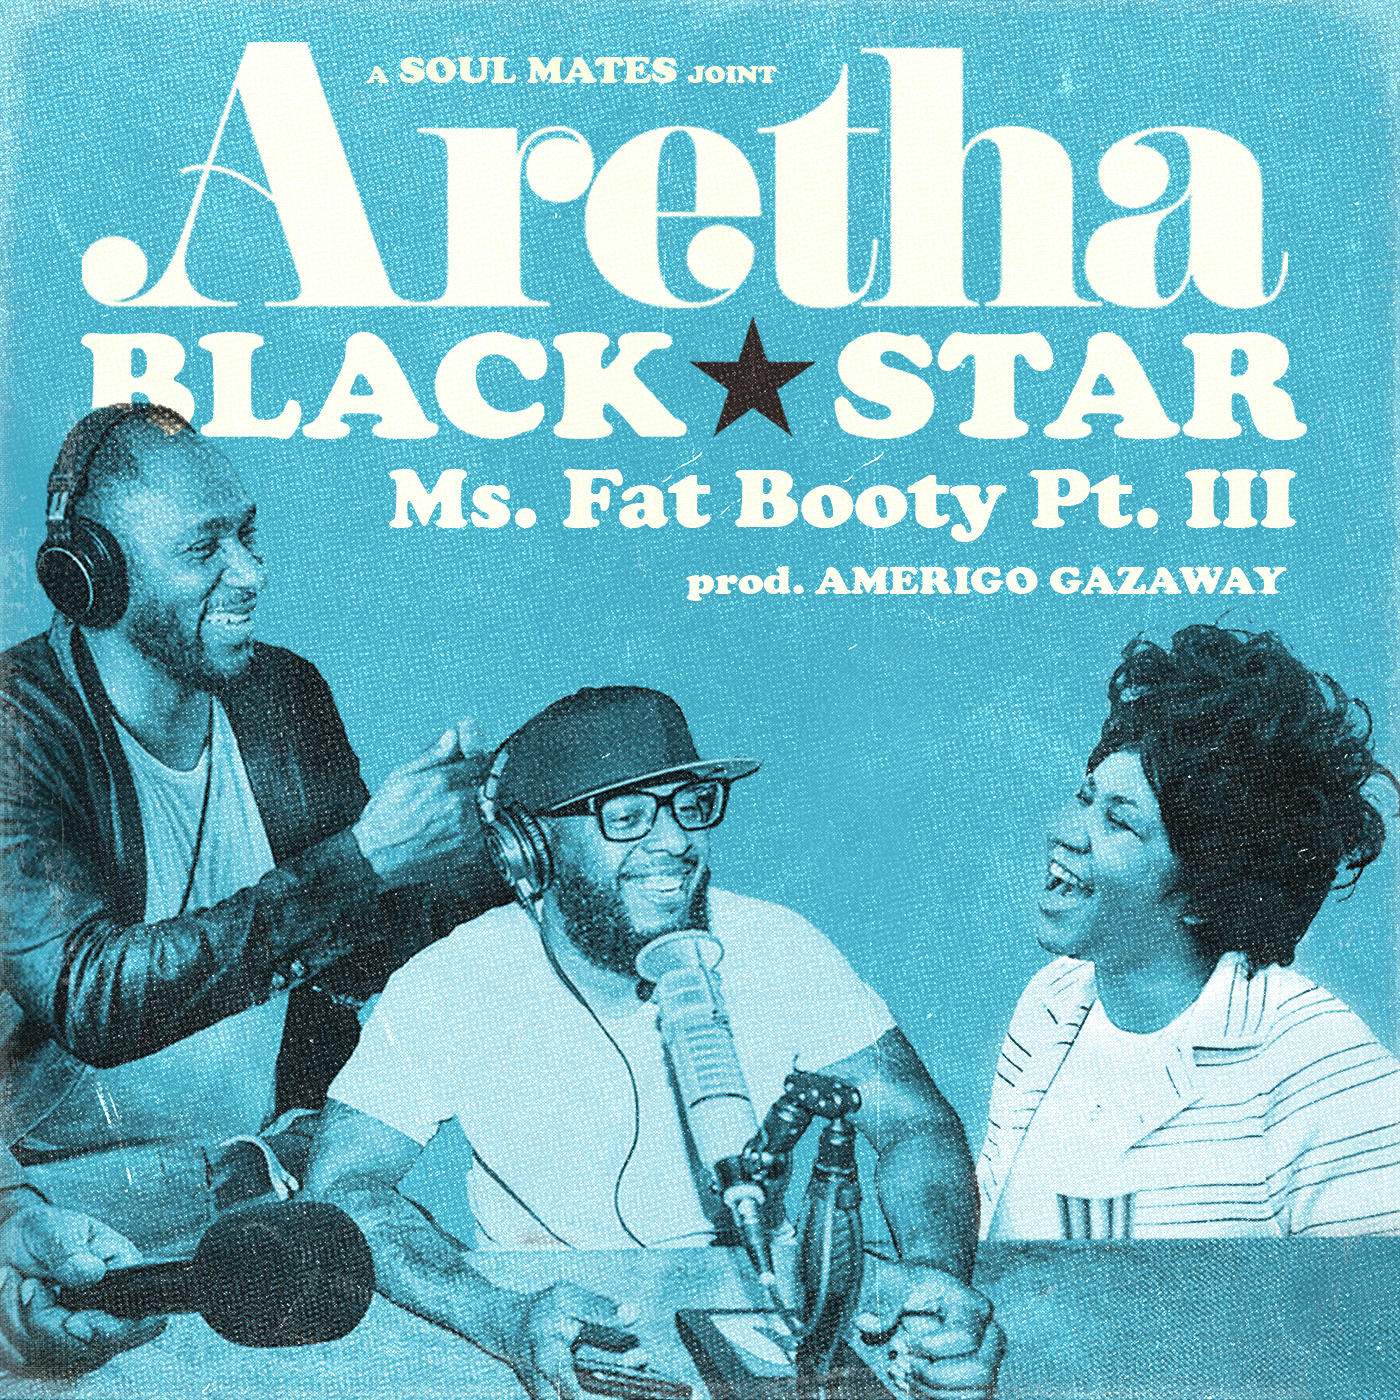 Black Star & Aretha Franklin - Ms. Fat Booty Pt. III